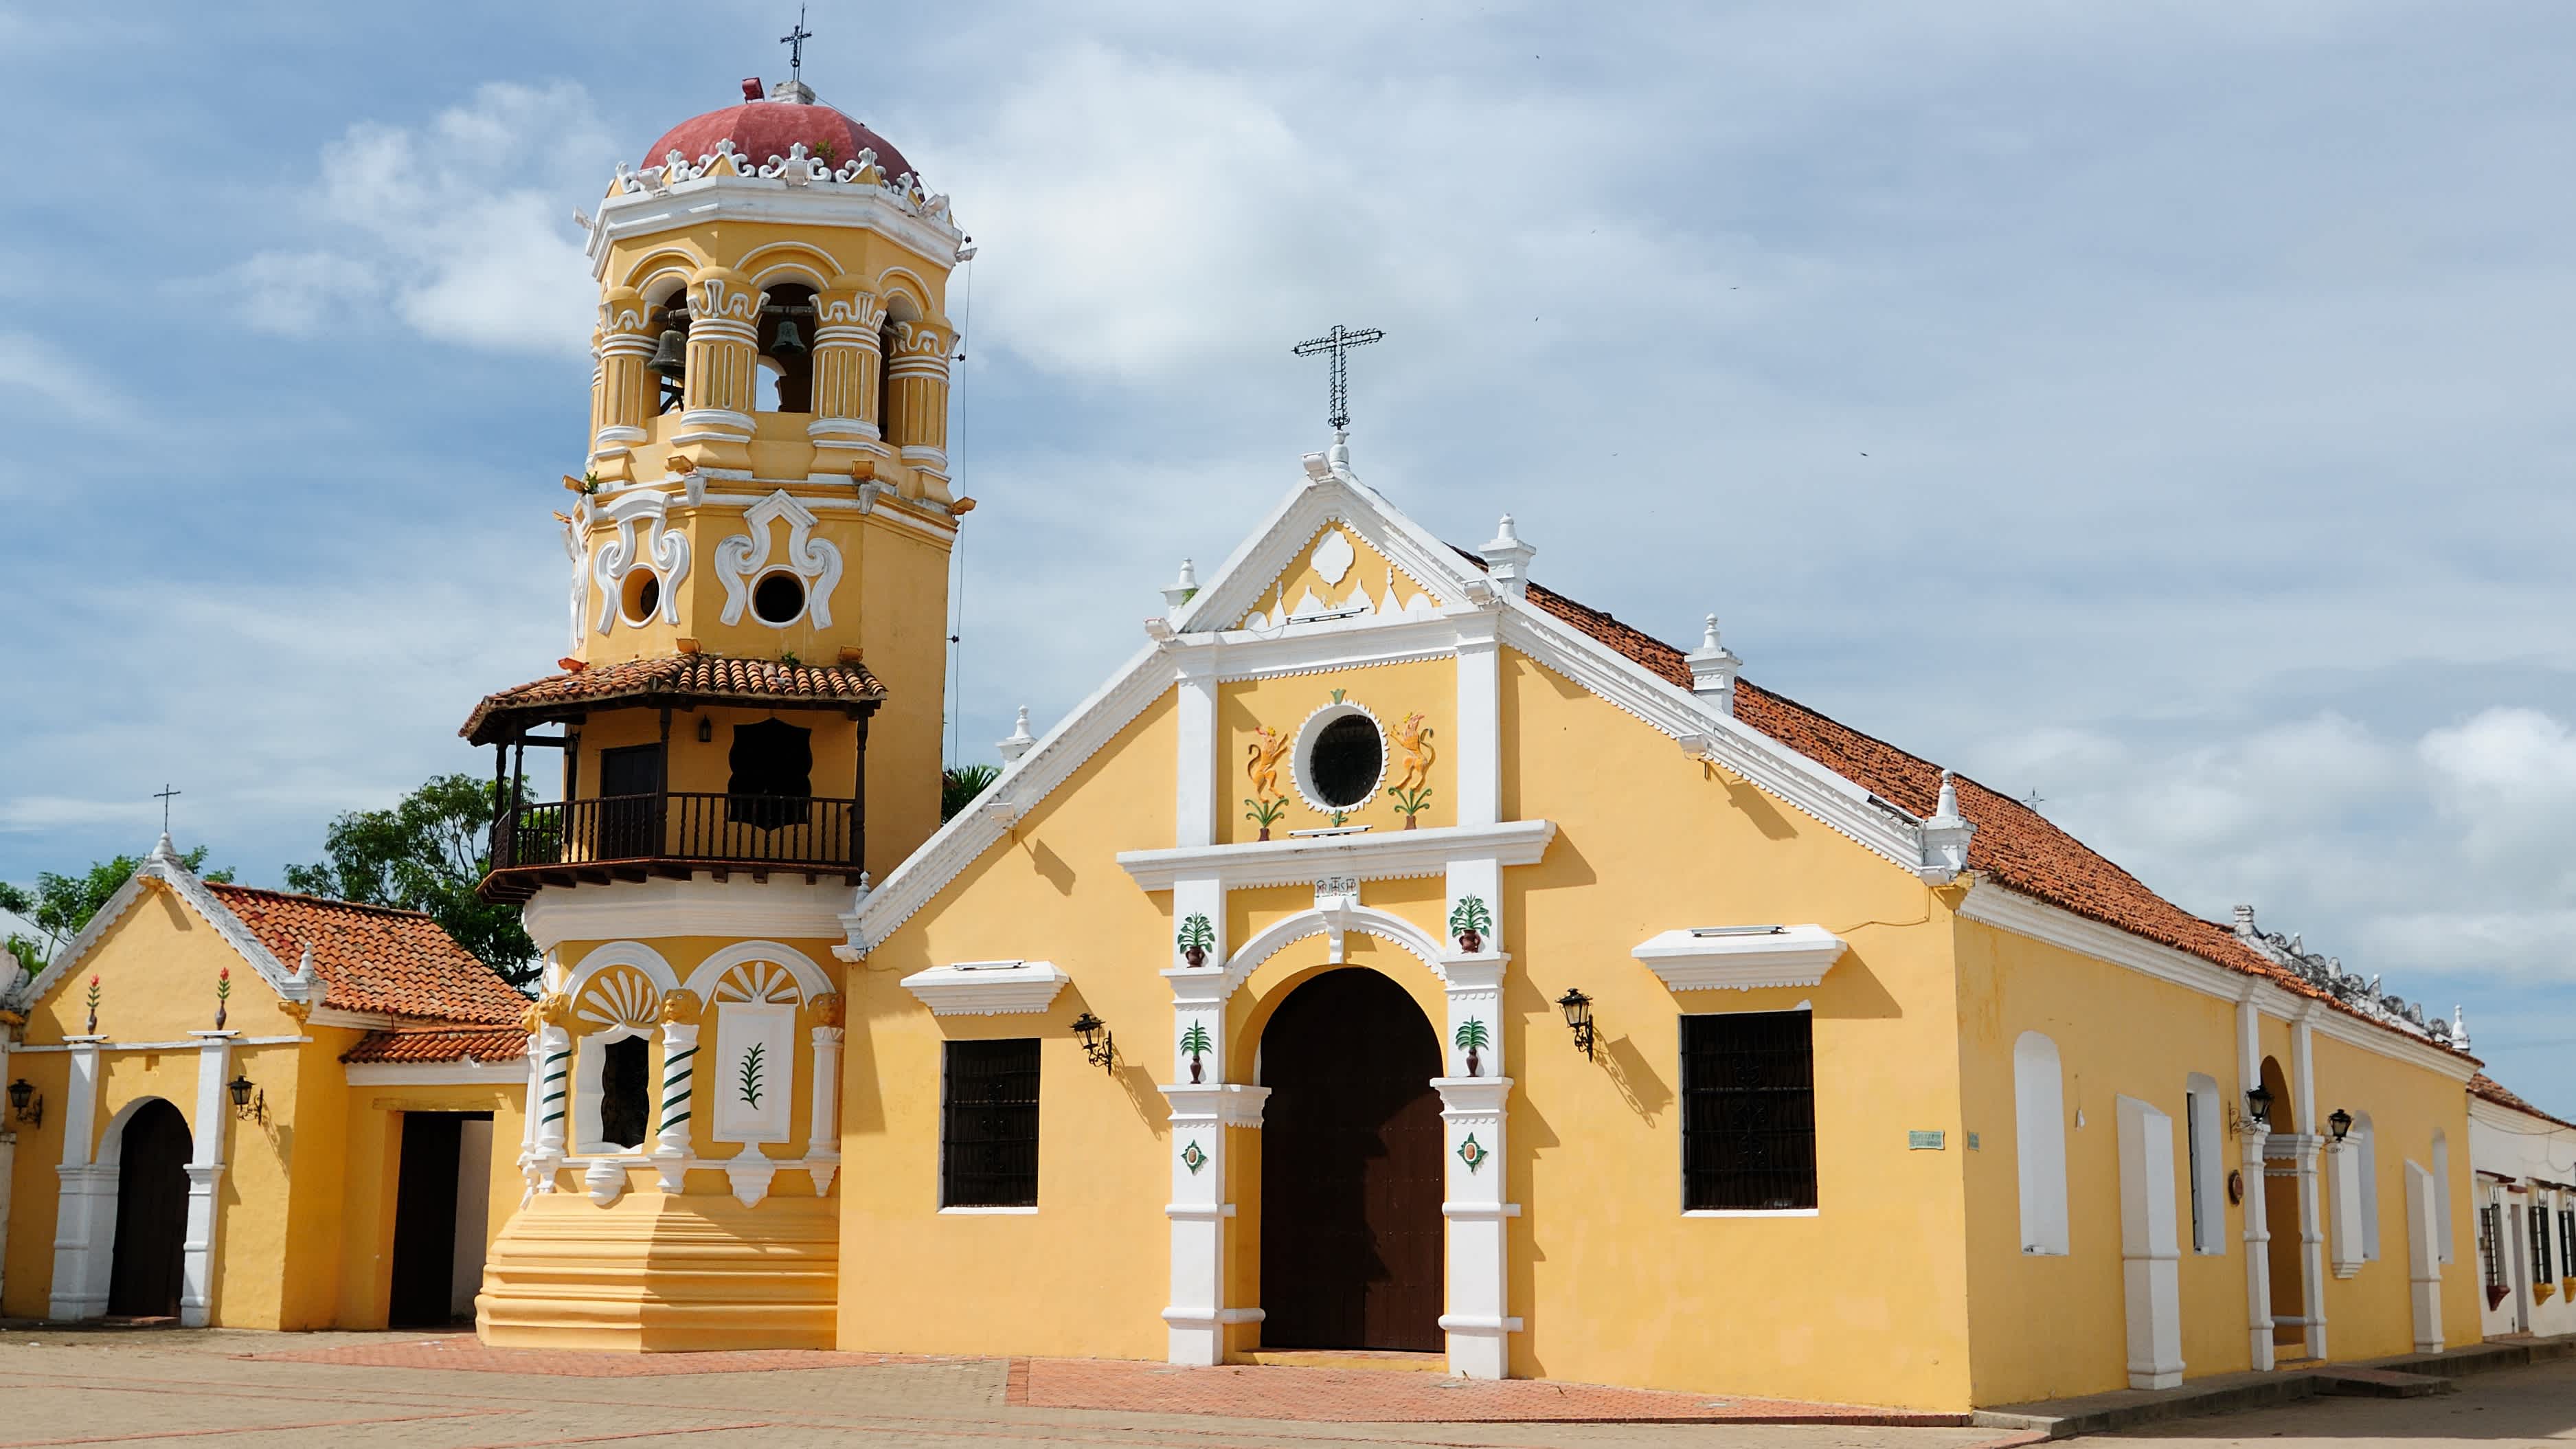 Mompos, koloniale Stadt in Kolumbien - Ansicht der Kirche Santa Barbara